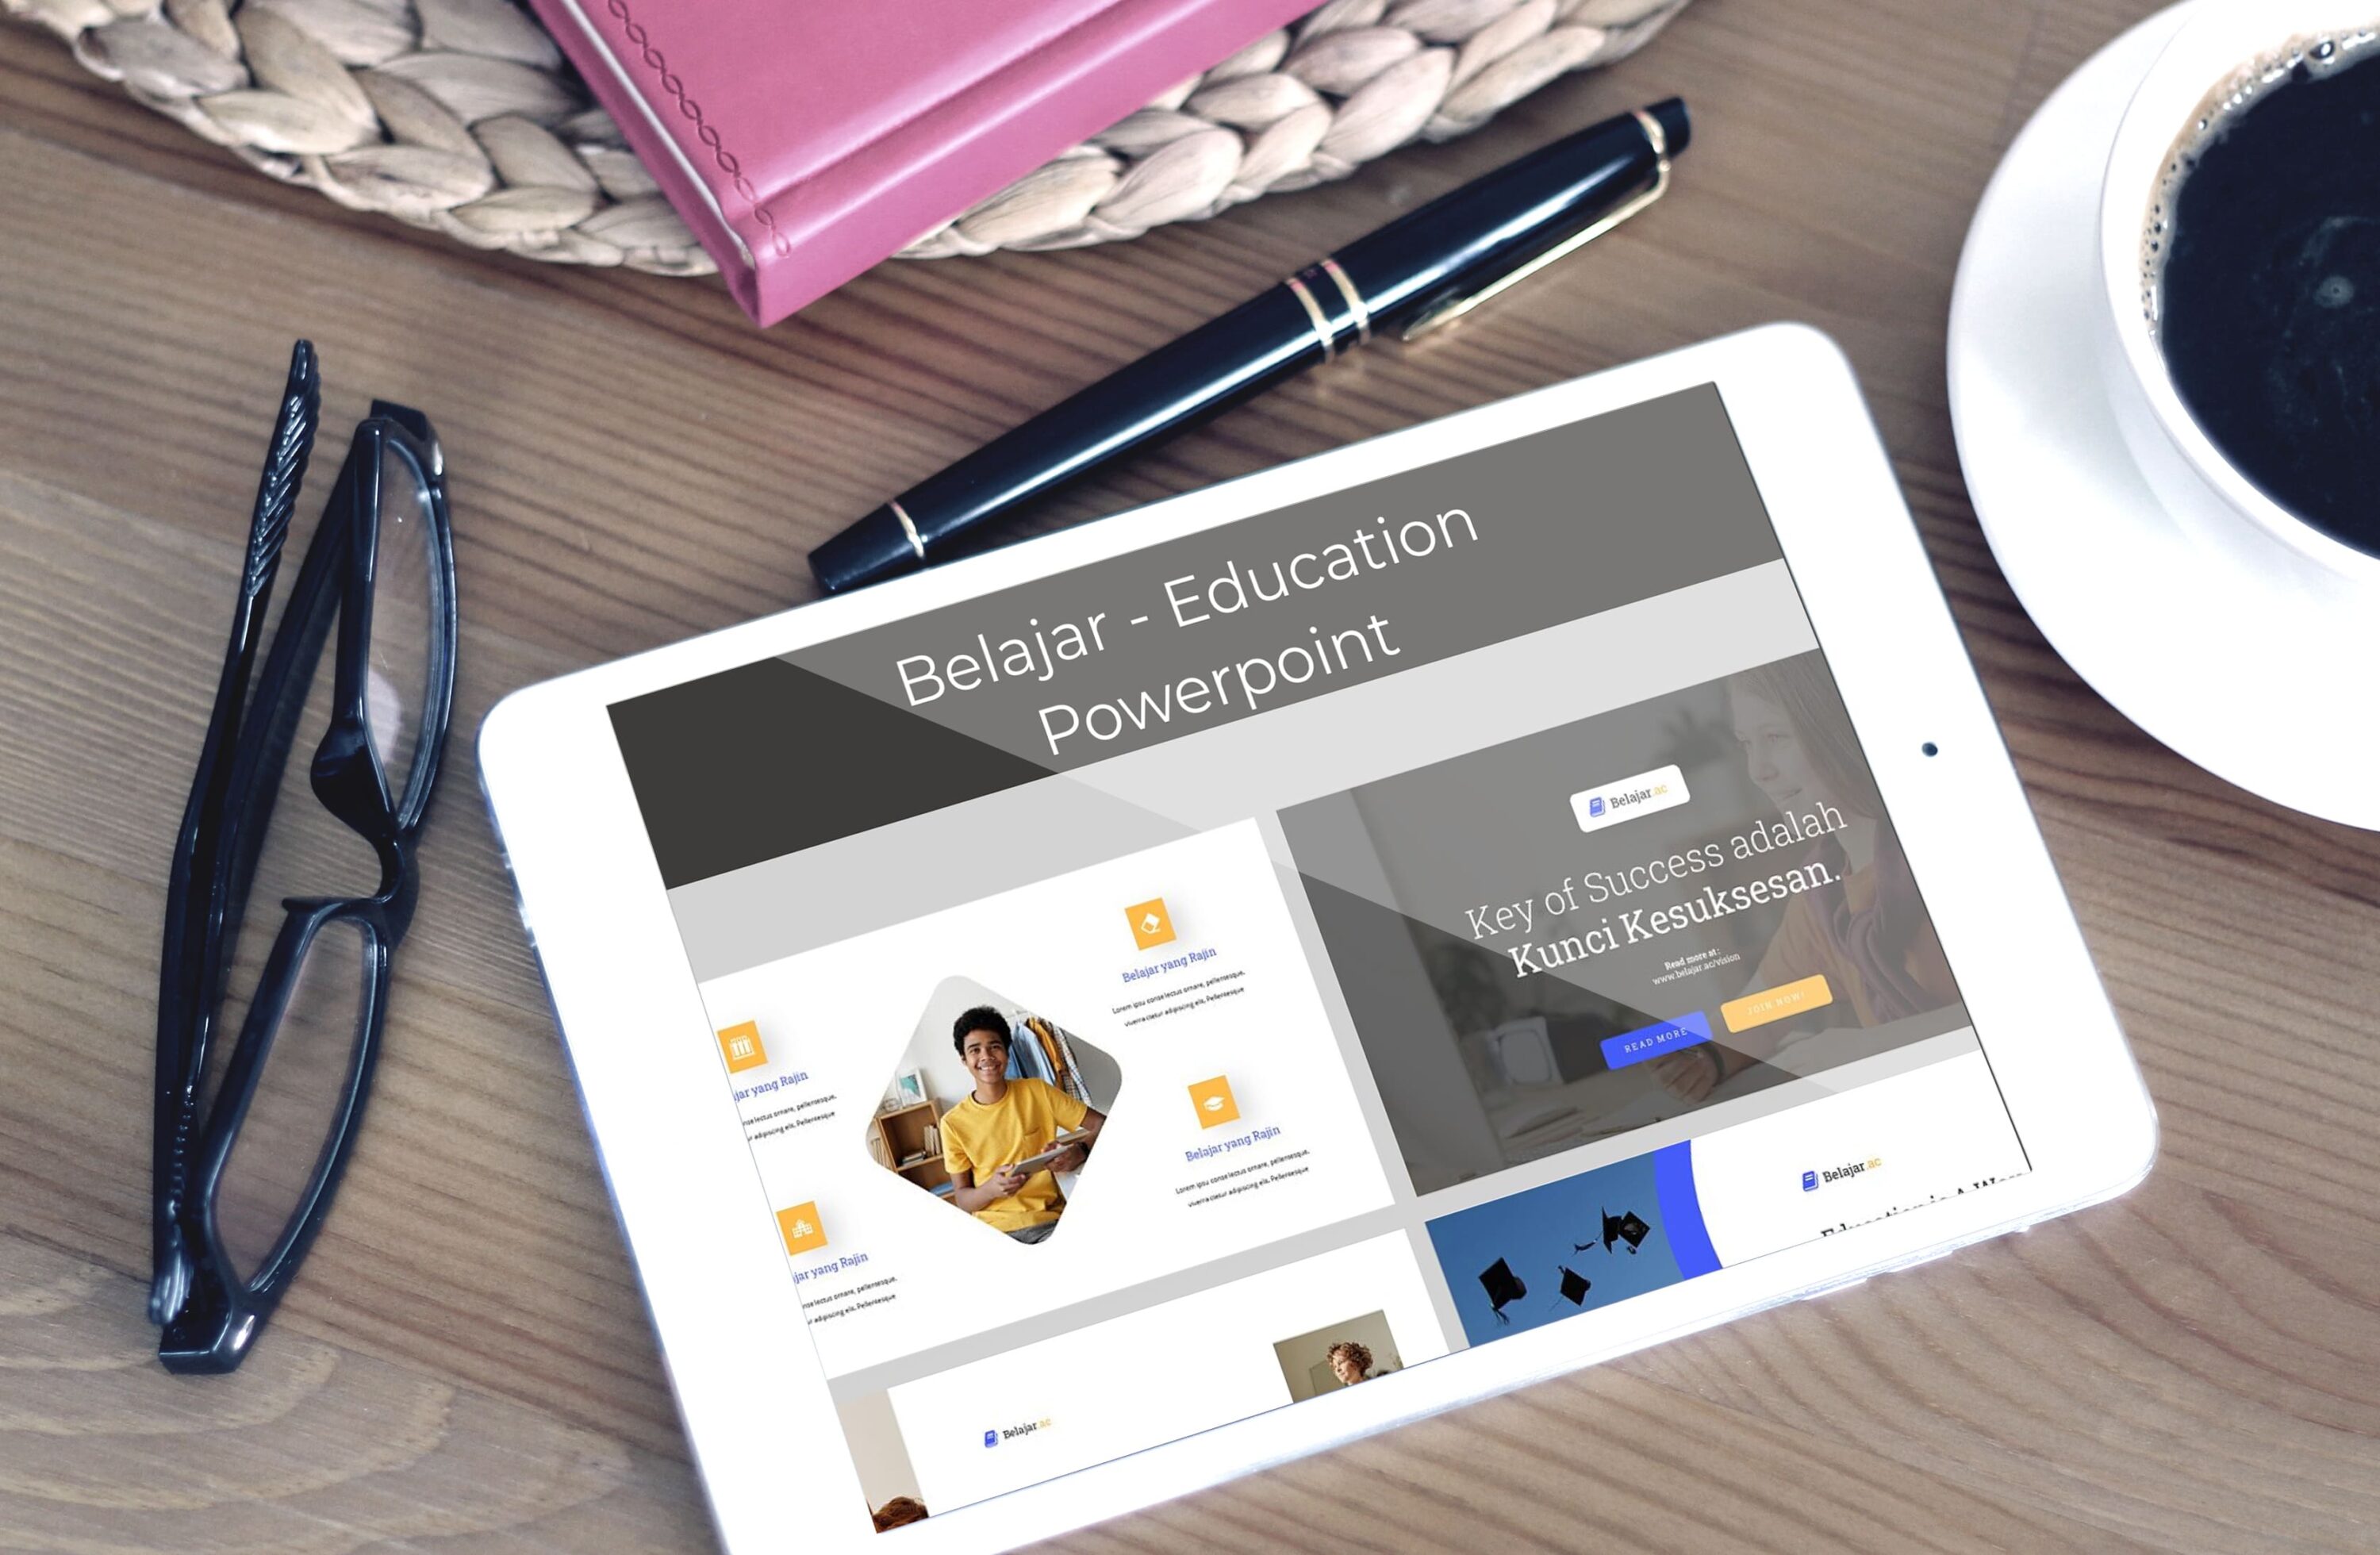 Belajar - Education Powerpoint - tablet.